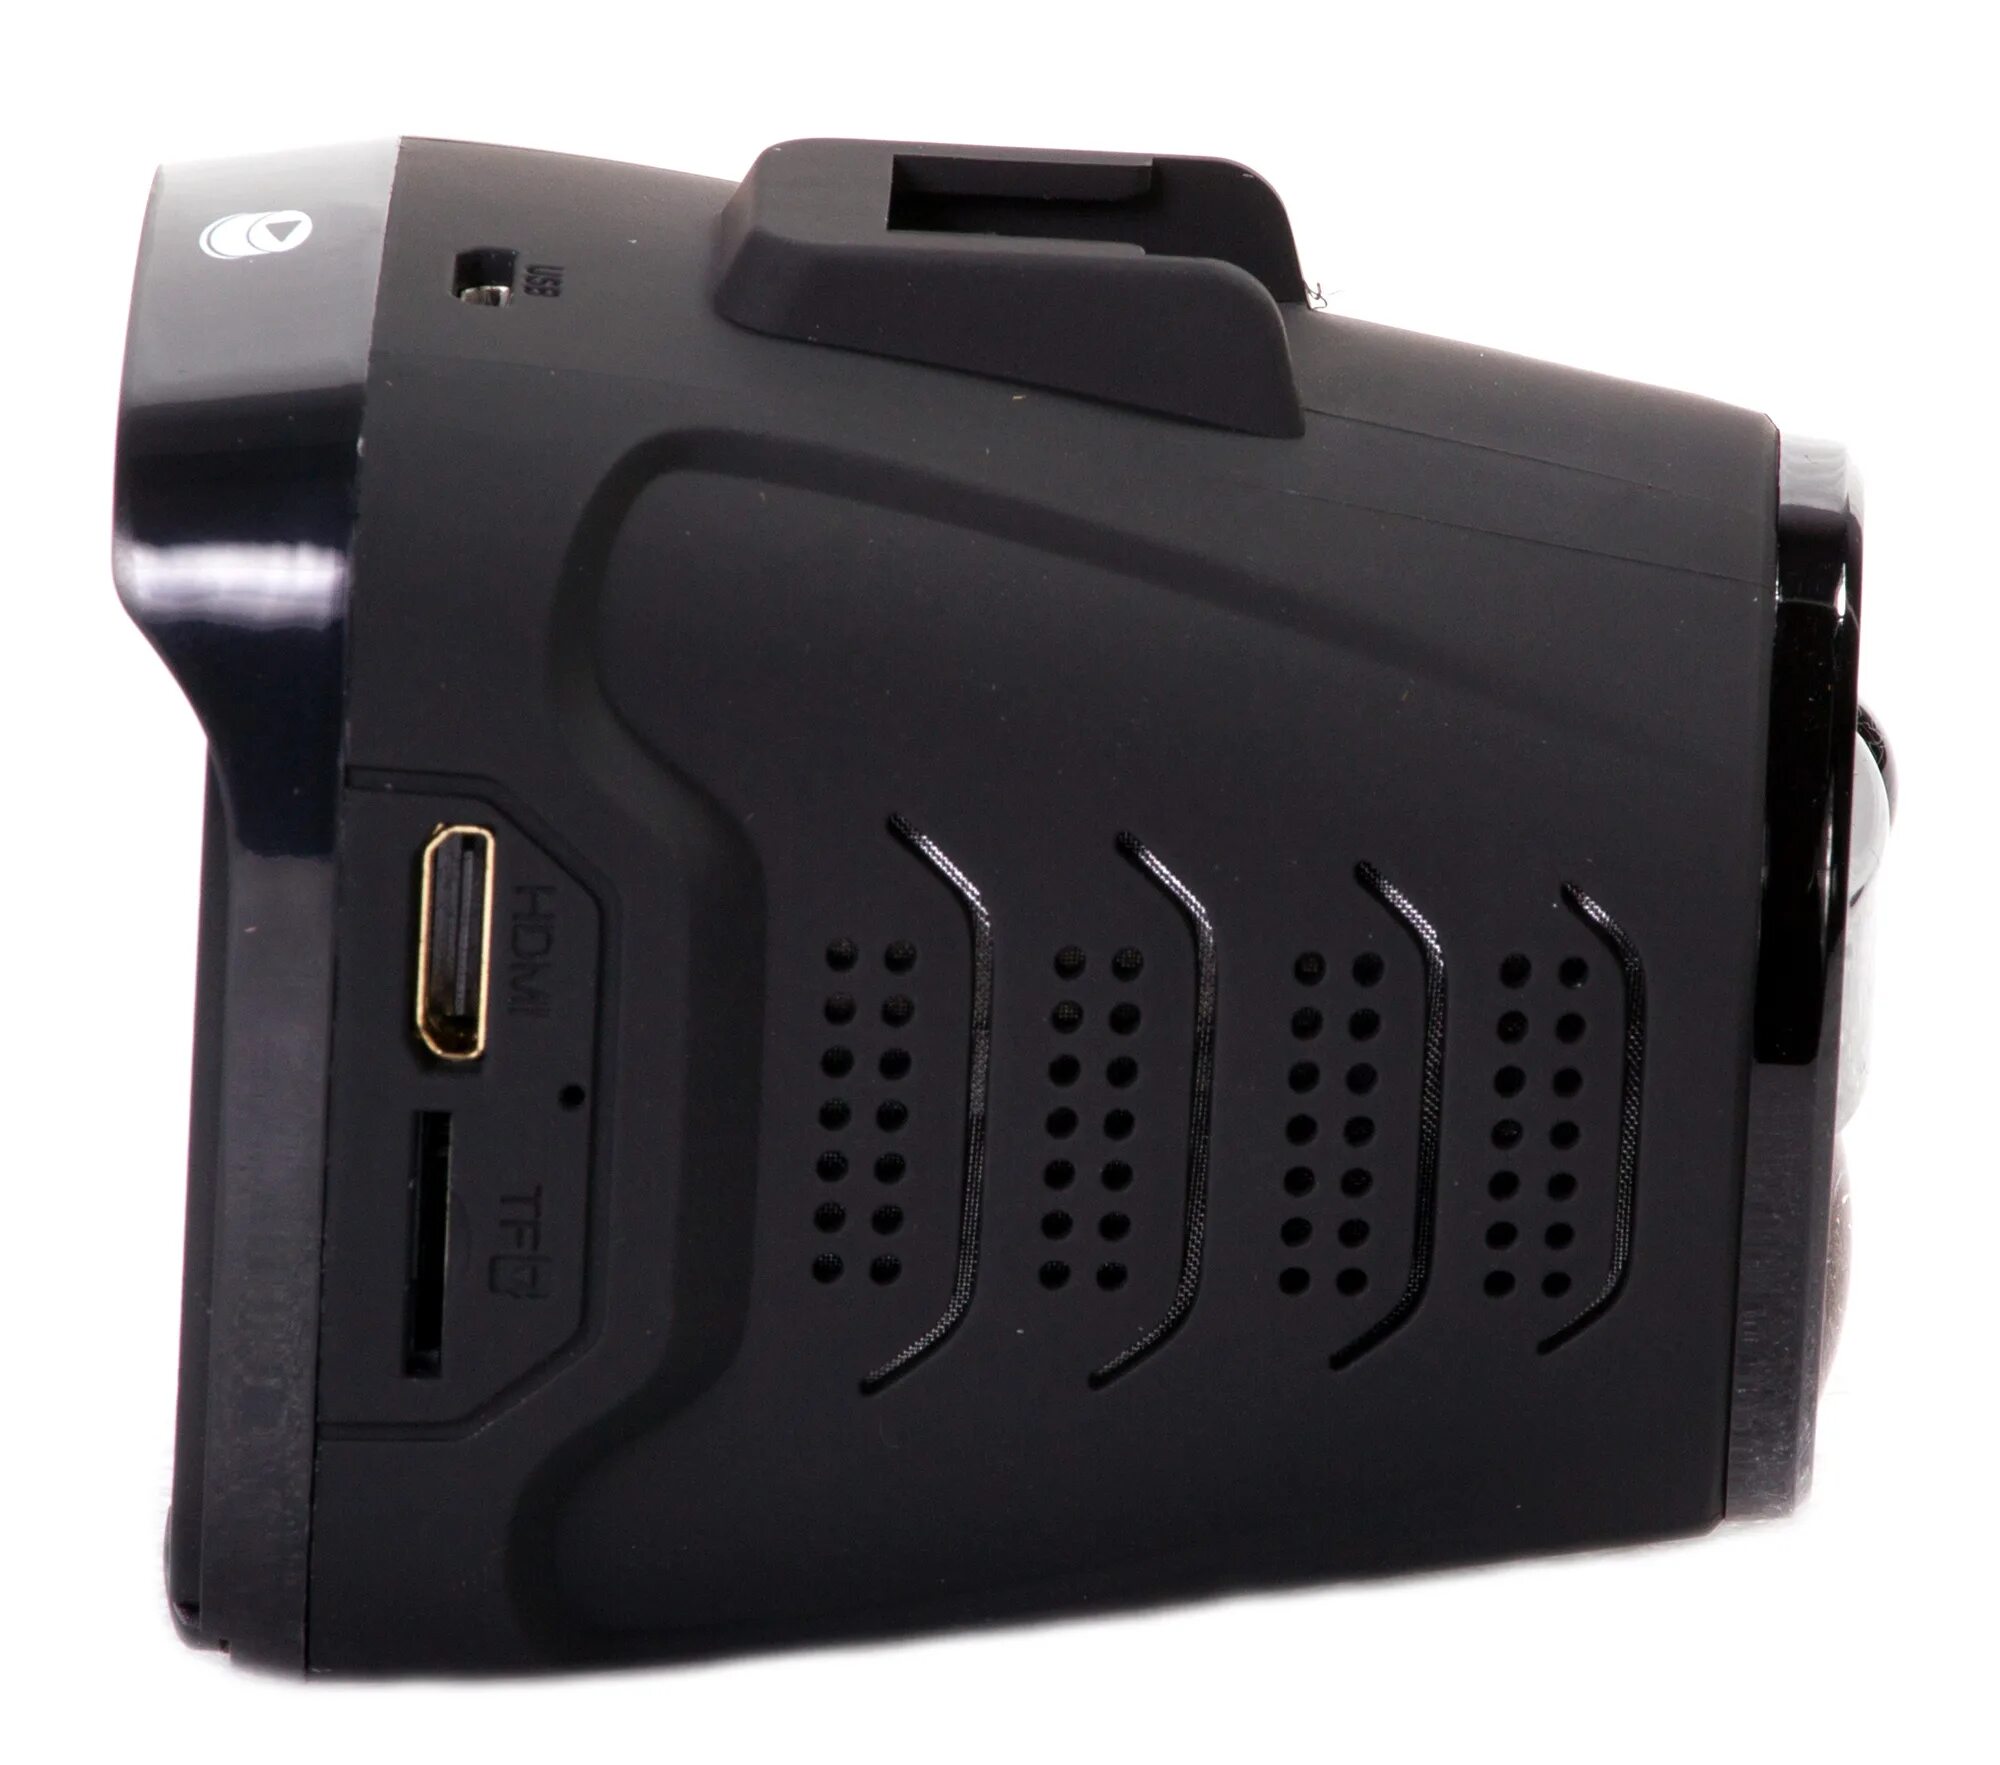 Playme p350 Tetra. Видеорегистратор с радар-детектором Playme p350 Tetra, GPS. Р350 тетра видеорегистратор плейми. Видеорегистратор Playme 3 в 1.